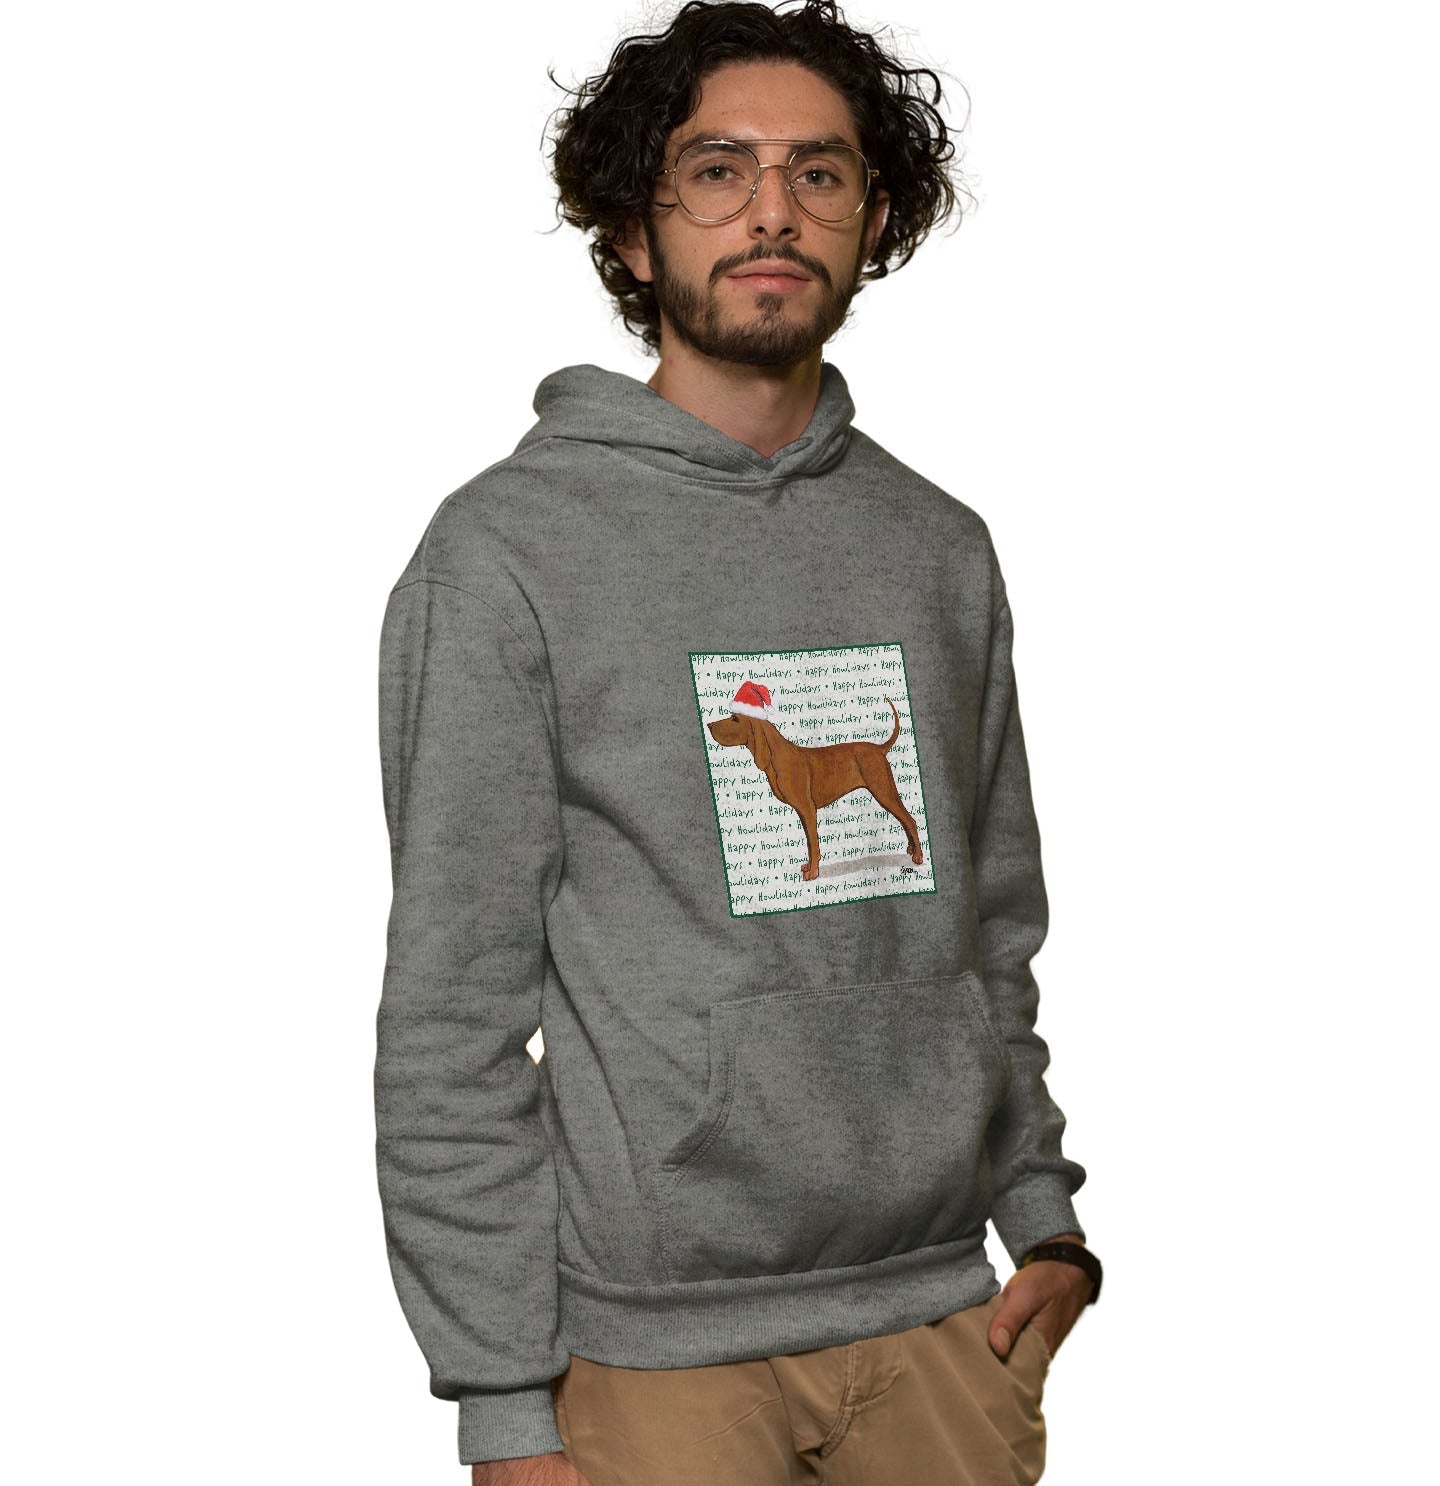 Redbone Coonhound Happy Howlidays Text - Adult Unisex Hoodie Sweatshirt